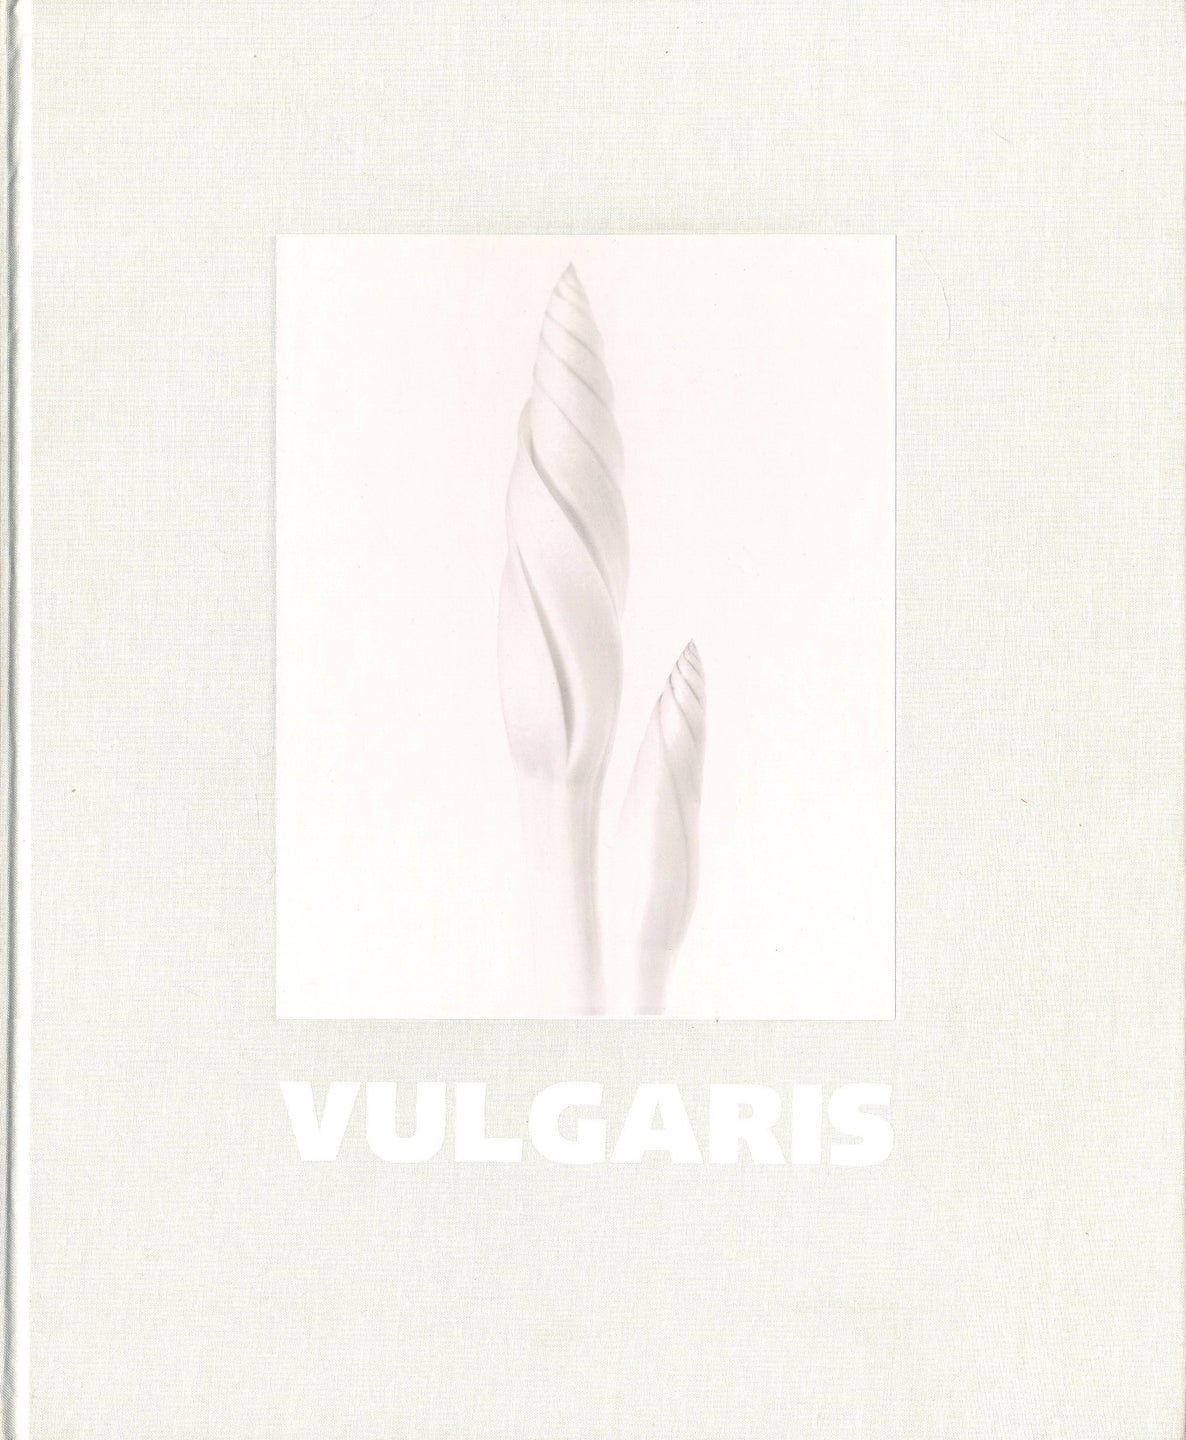 Ron van Dongen: Vulgaris, Special Limited Edition (with Gelatin Silver Print, "Crocus 'Jeanne D'Arc', 1999" Variant)